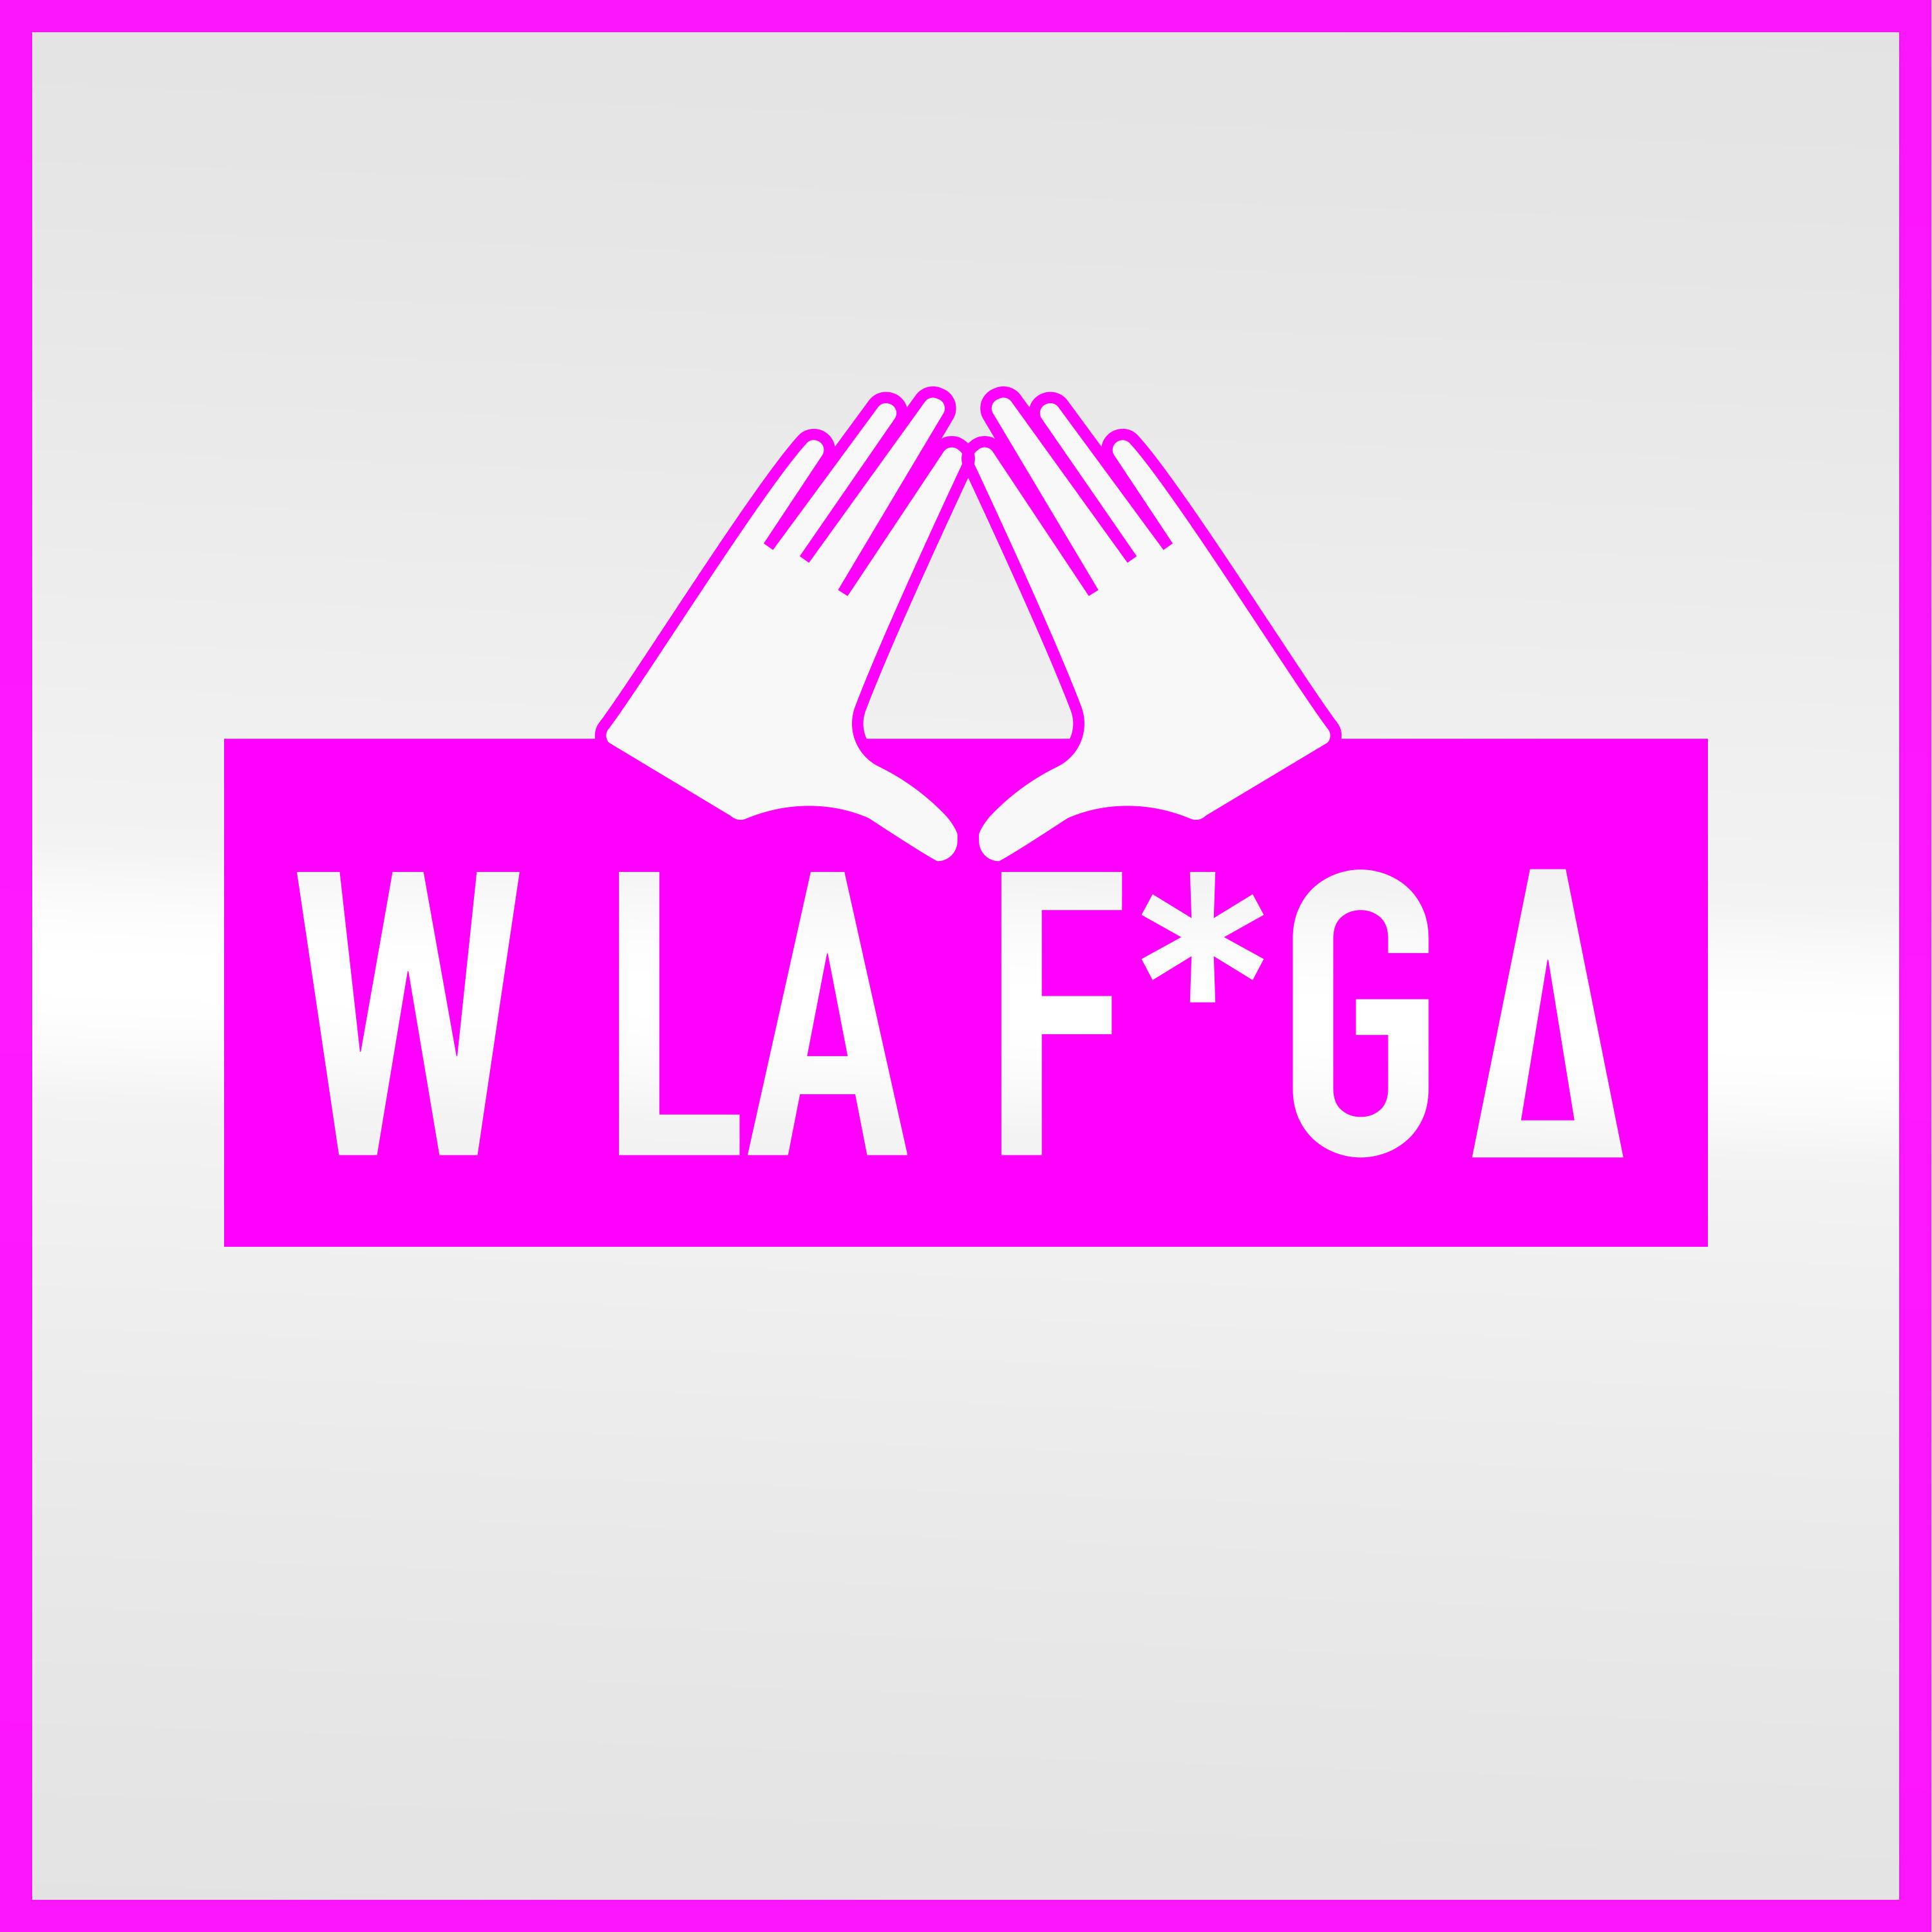 W La F*ga专辑